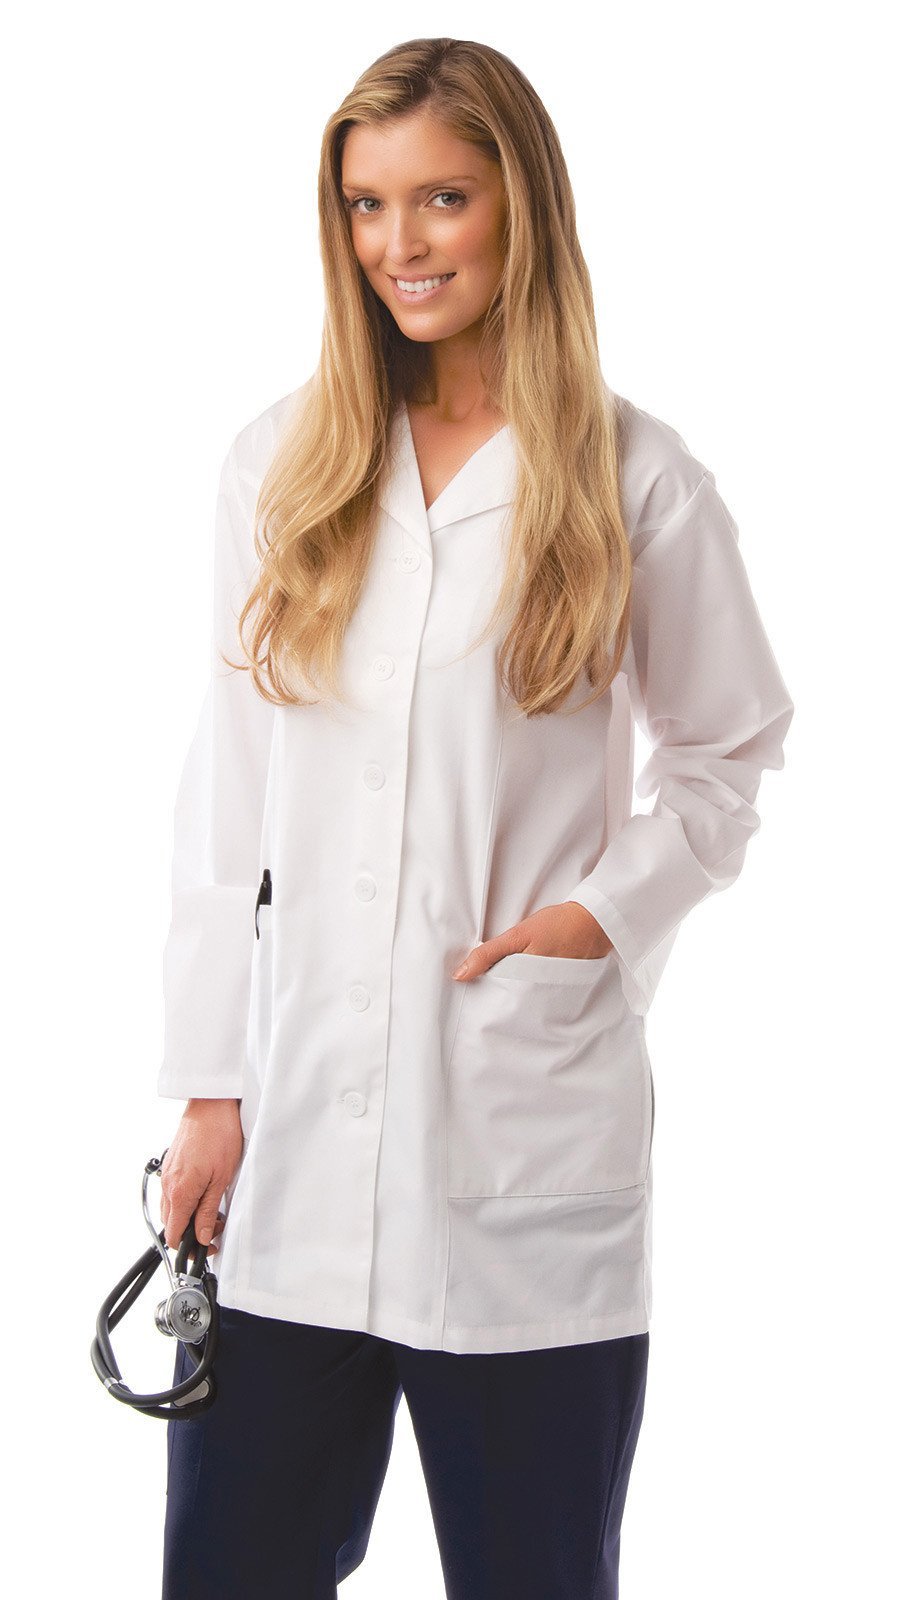 Women's Adjustable Long Lab Coat Medical Uniform